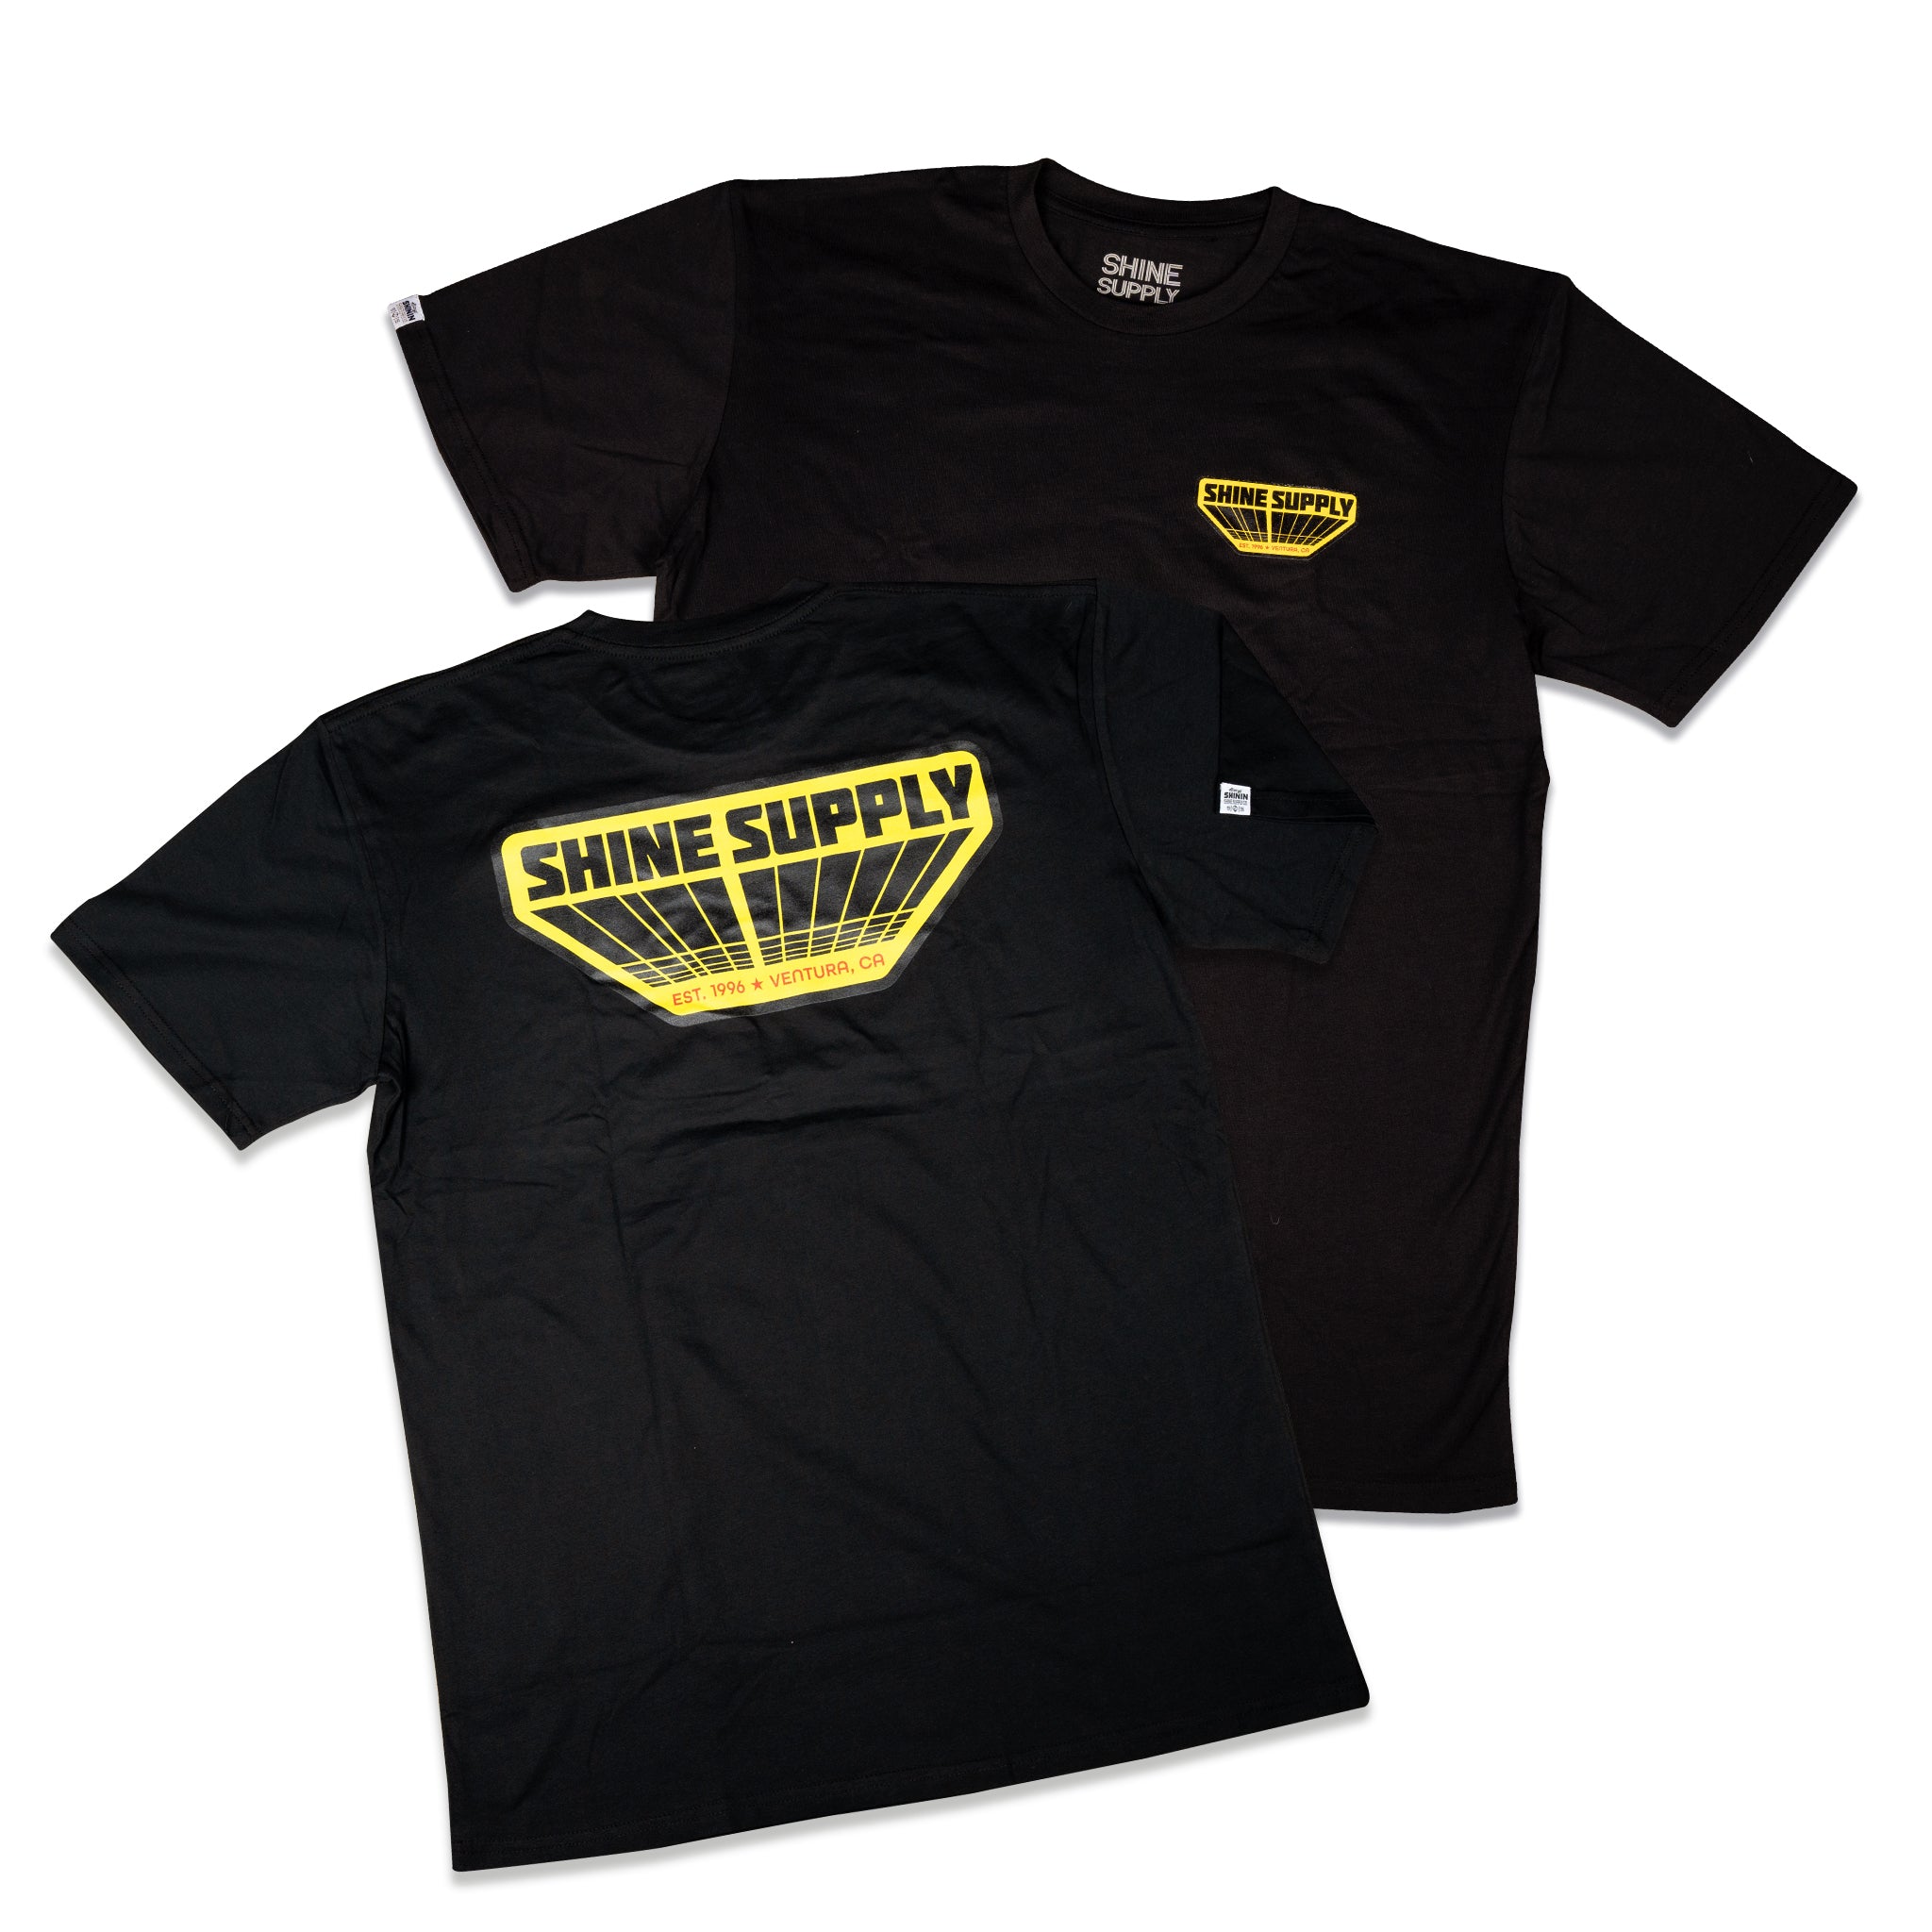 "Arcade" Shine Supply Authentics T-Shirt - Black/Yellow